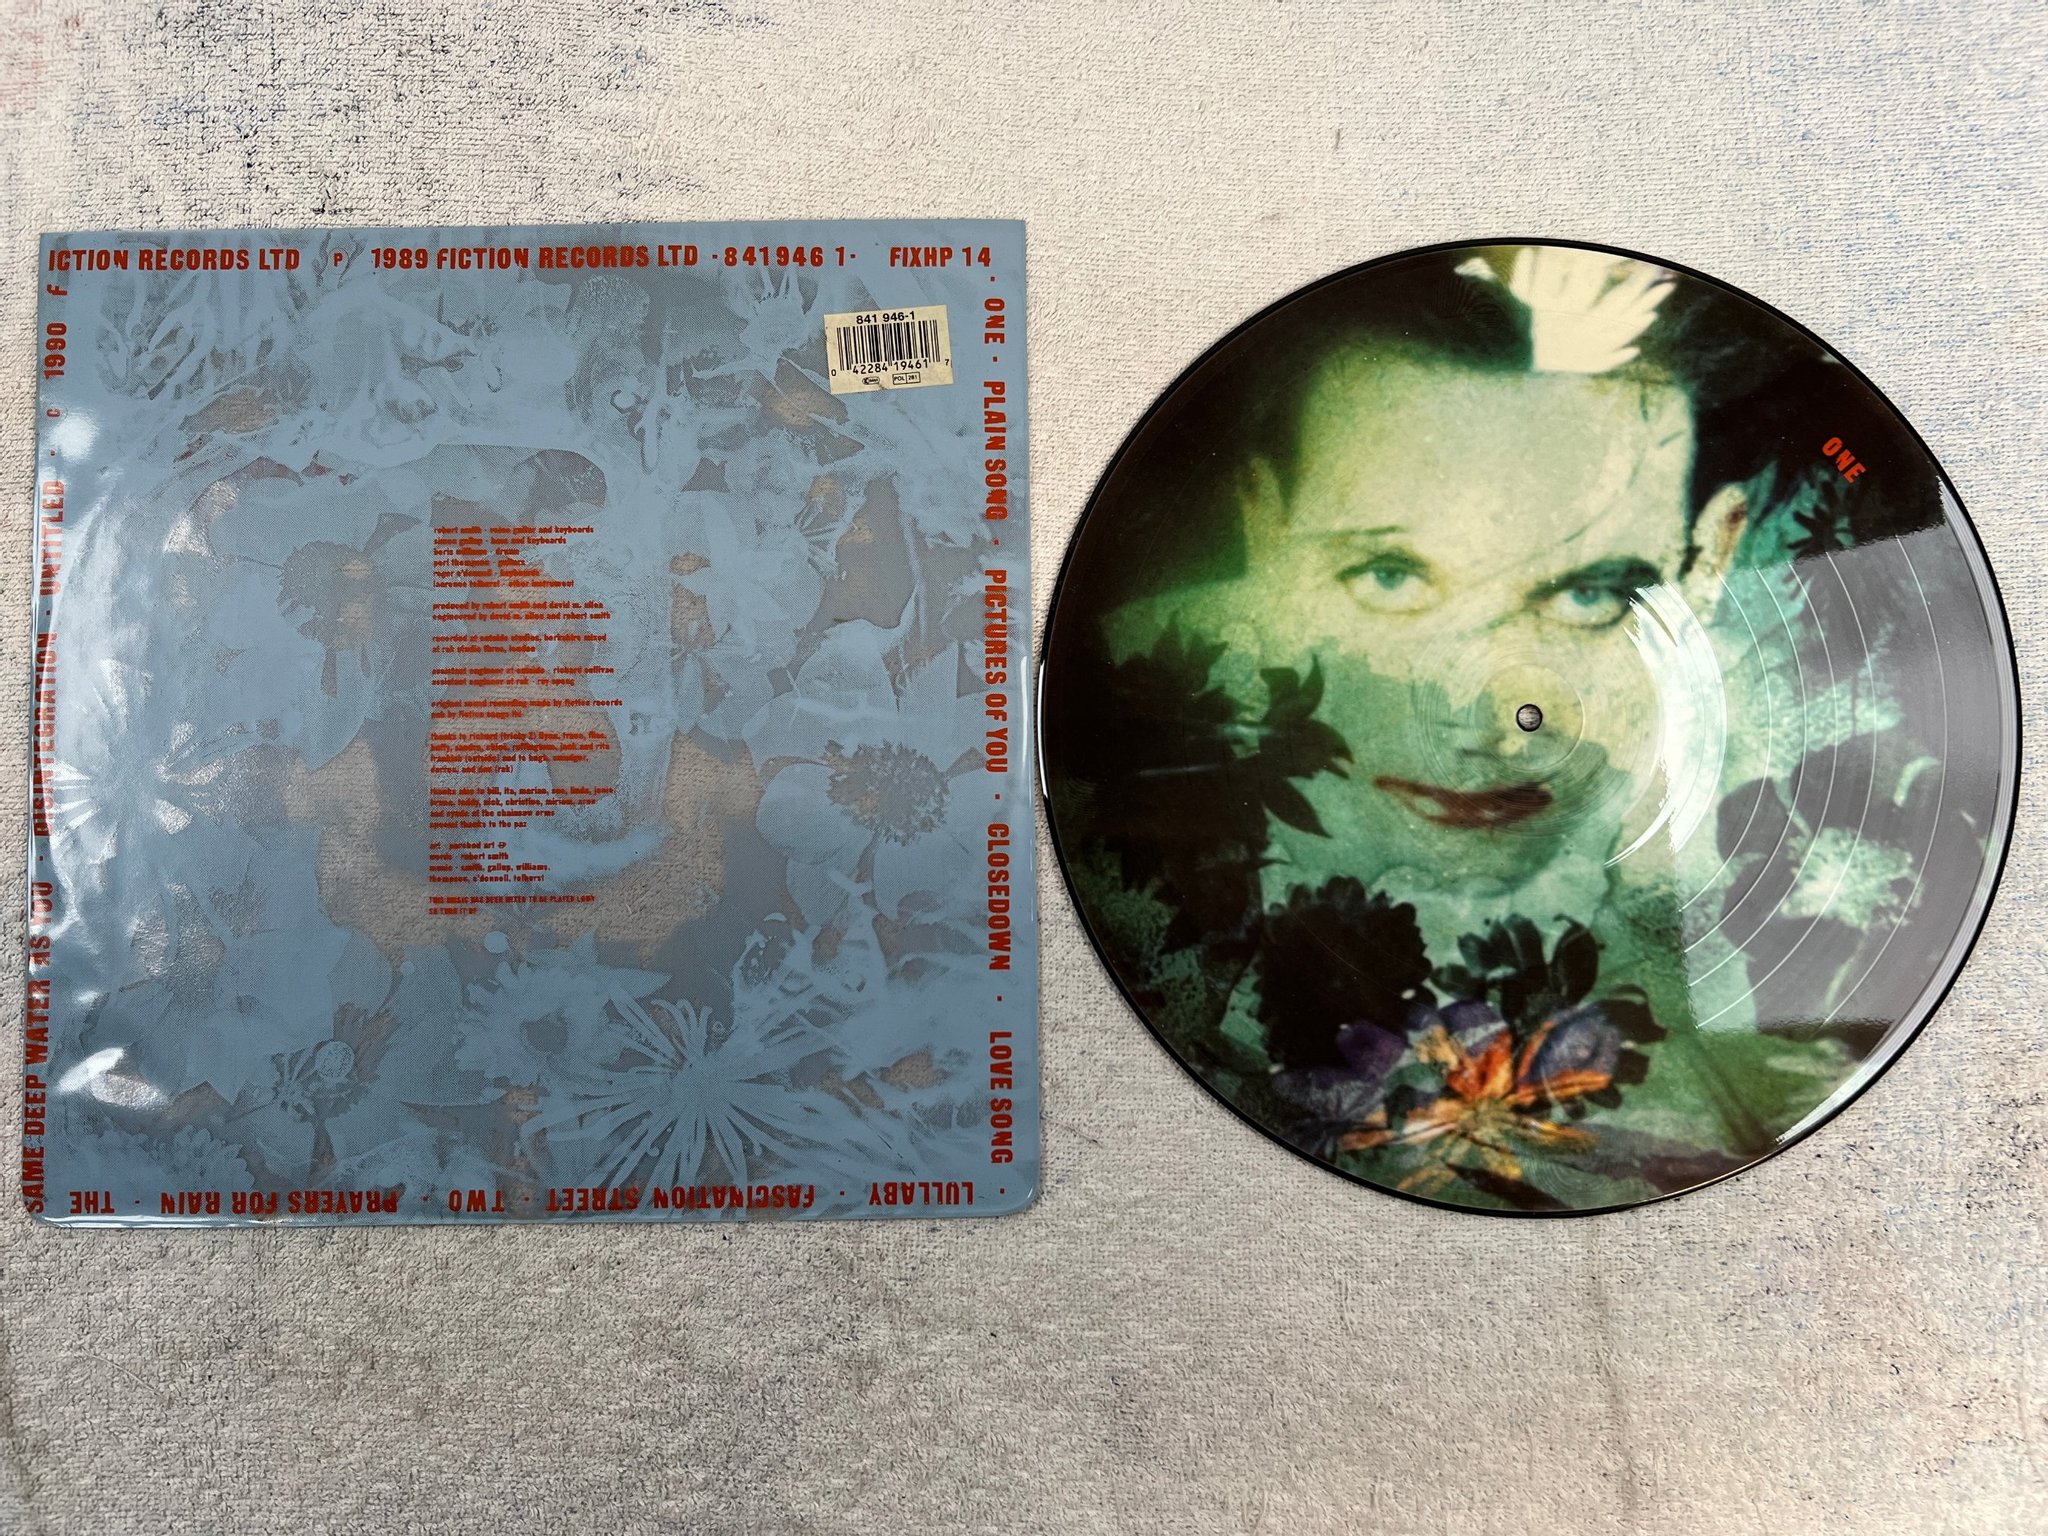 Omslagsbild för skivan THE CURE Disintegration LP picture disc -90 FICTION FIXHP 14 ** RARE **